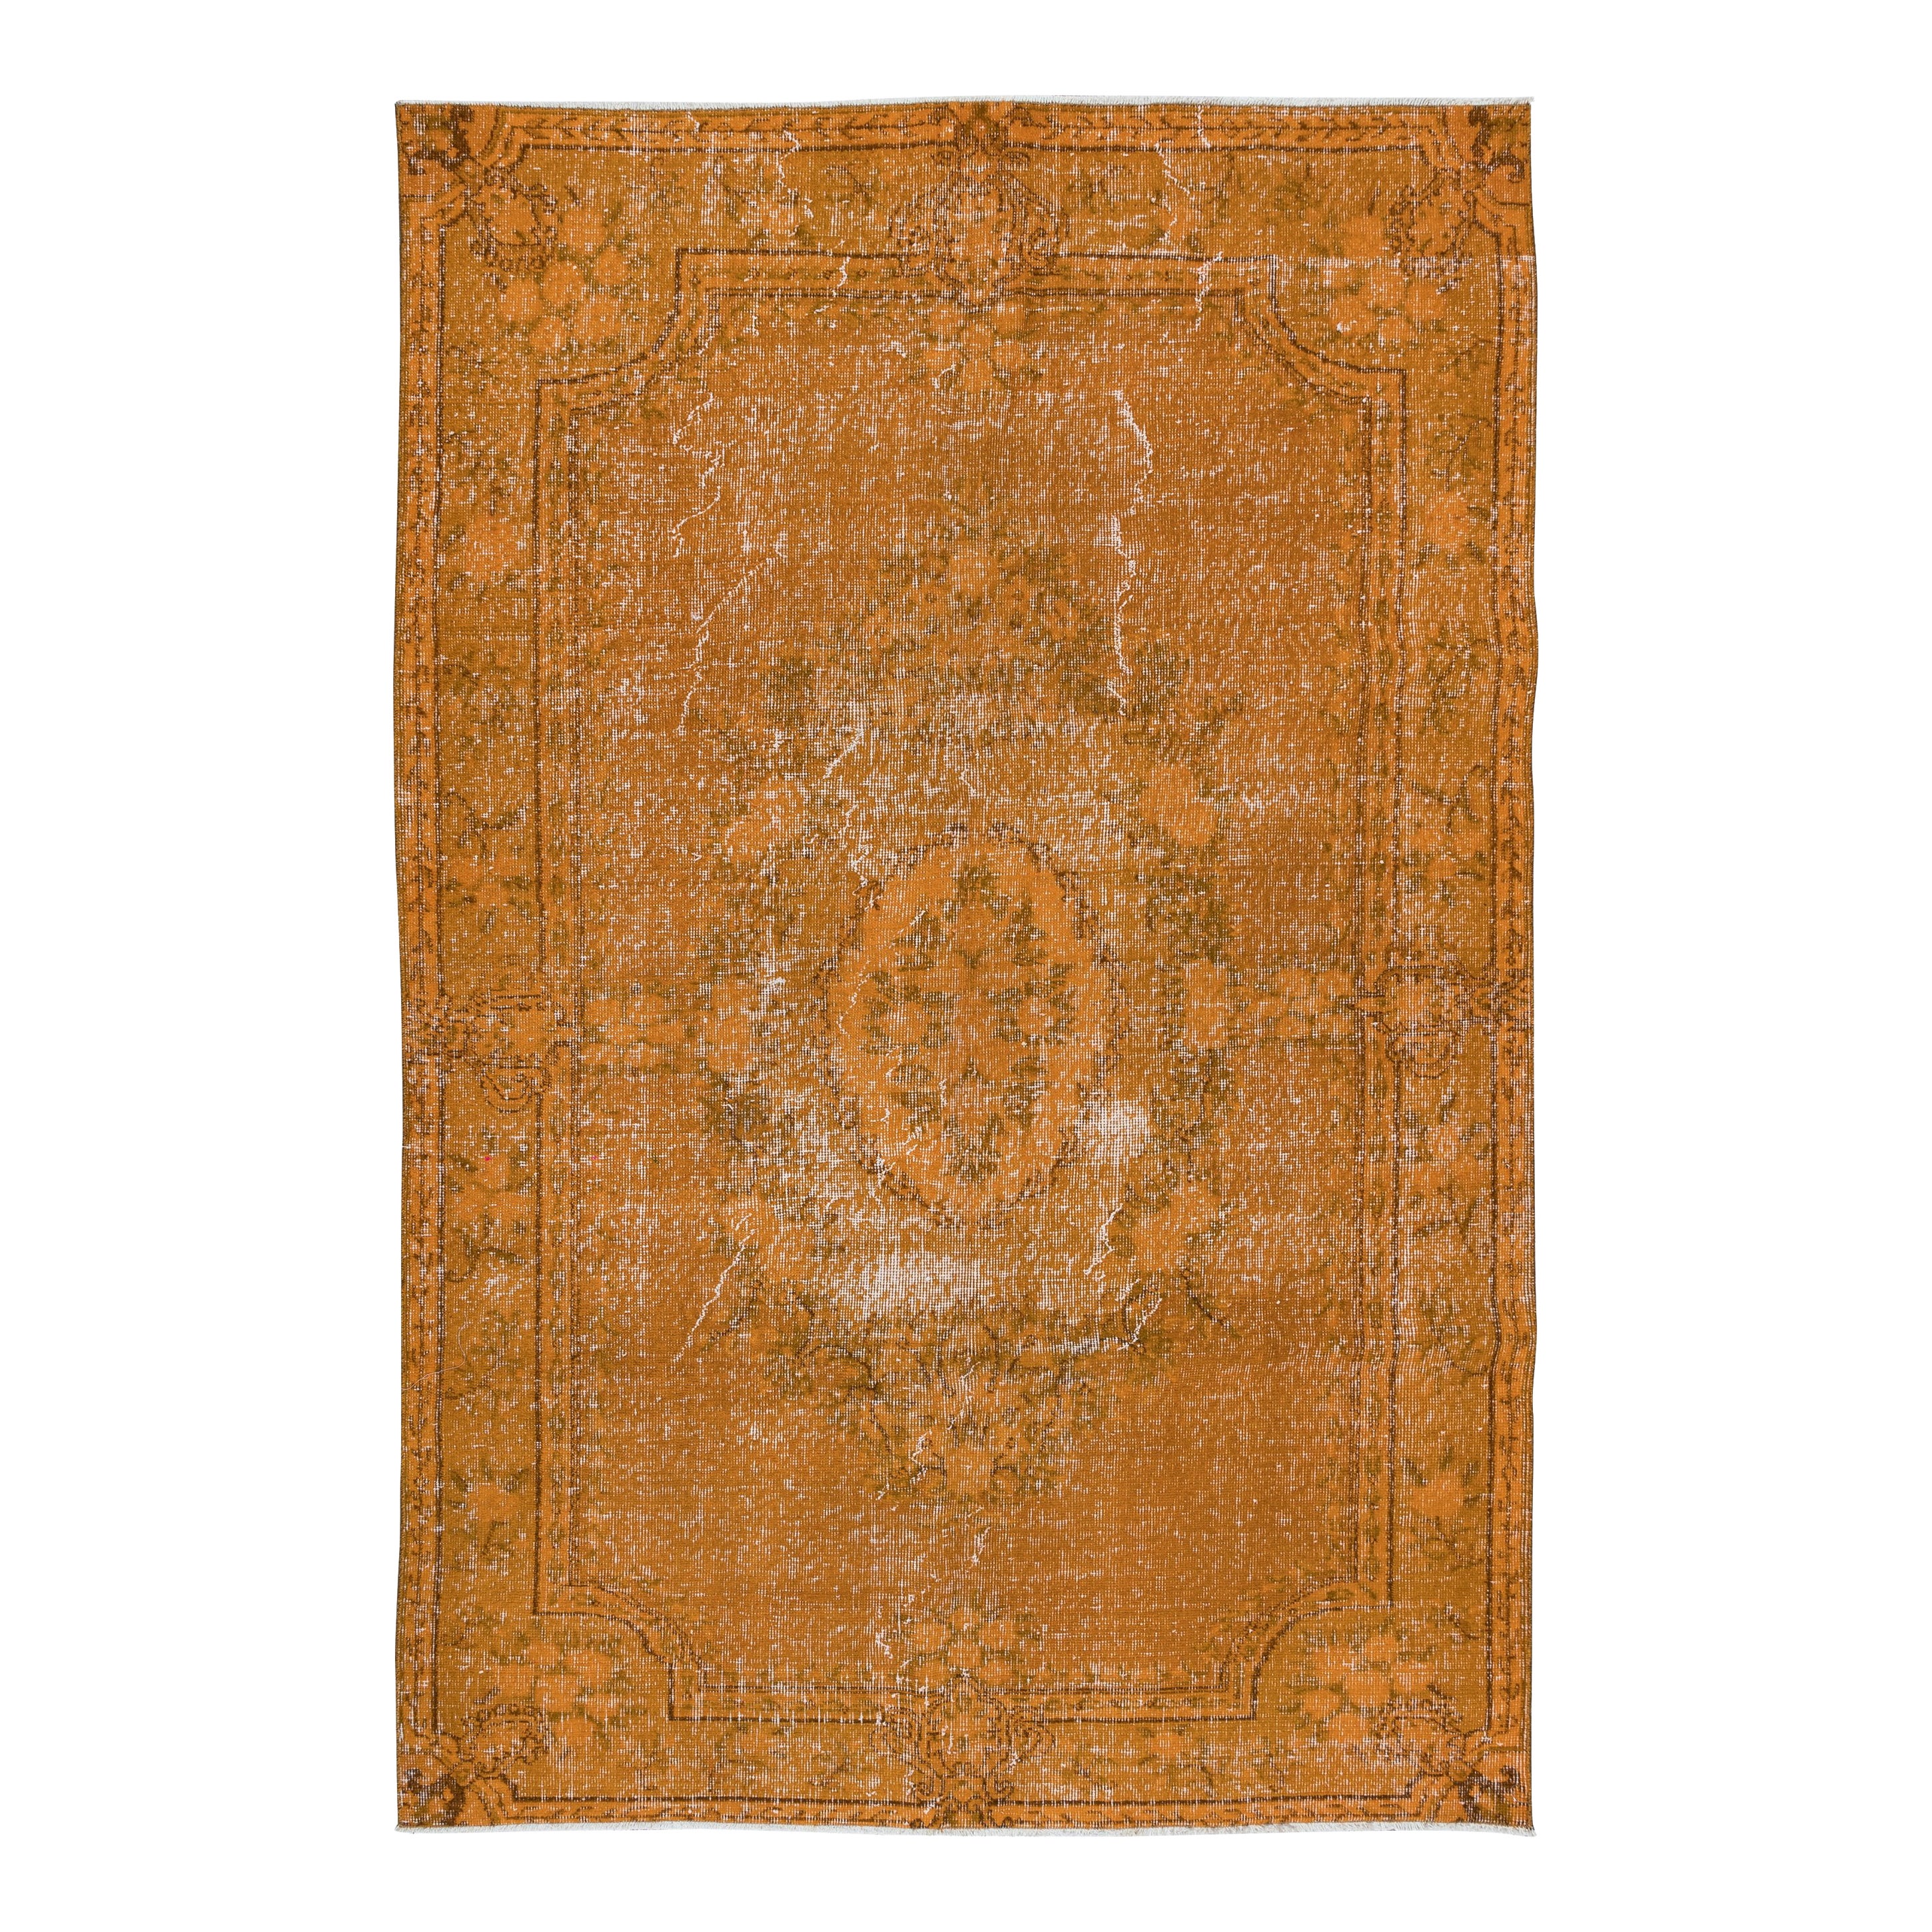 5.3x8 Ft Orange Area Rug, Handmade Floor Covering, Upcycled Turkish Carpet For Sale